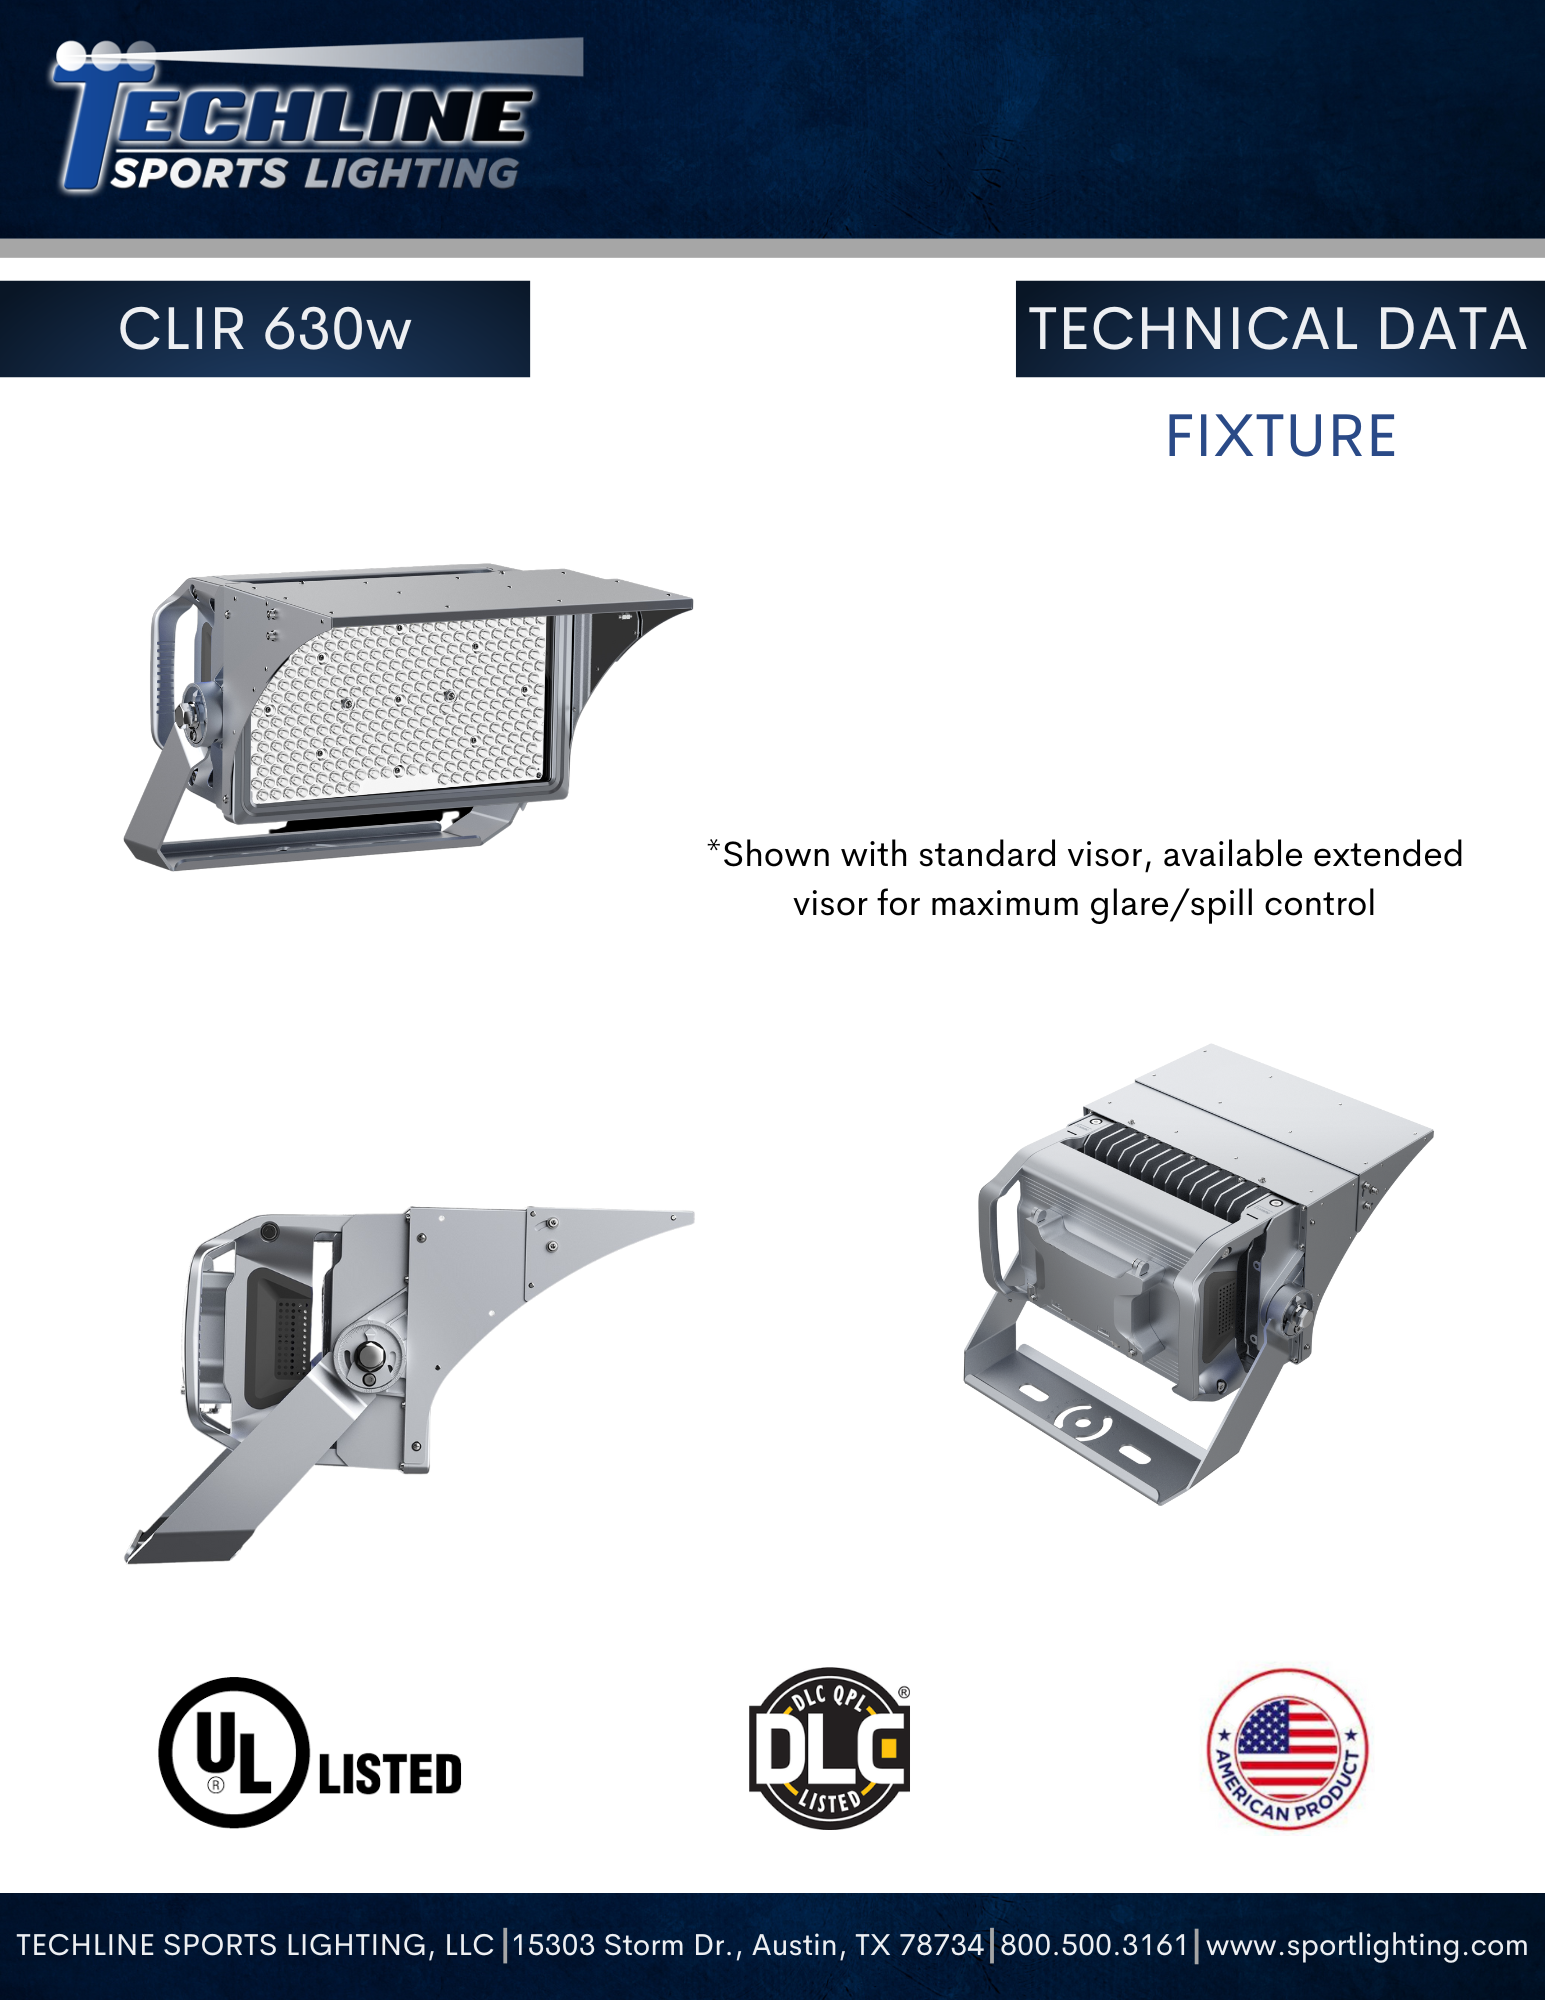 CLIR 630w Technical Data